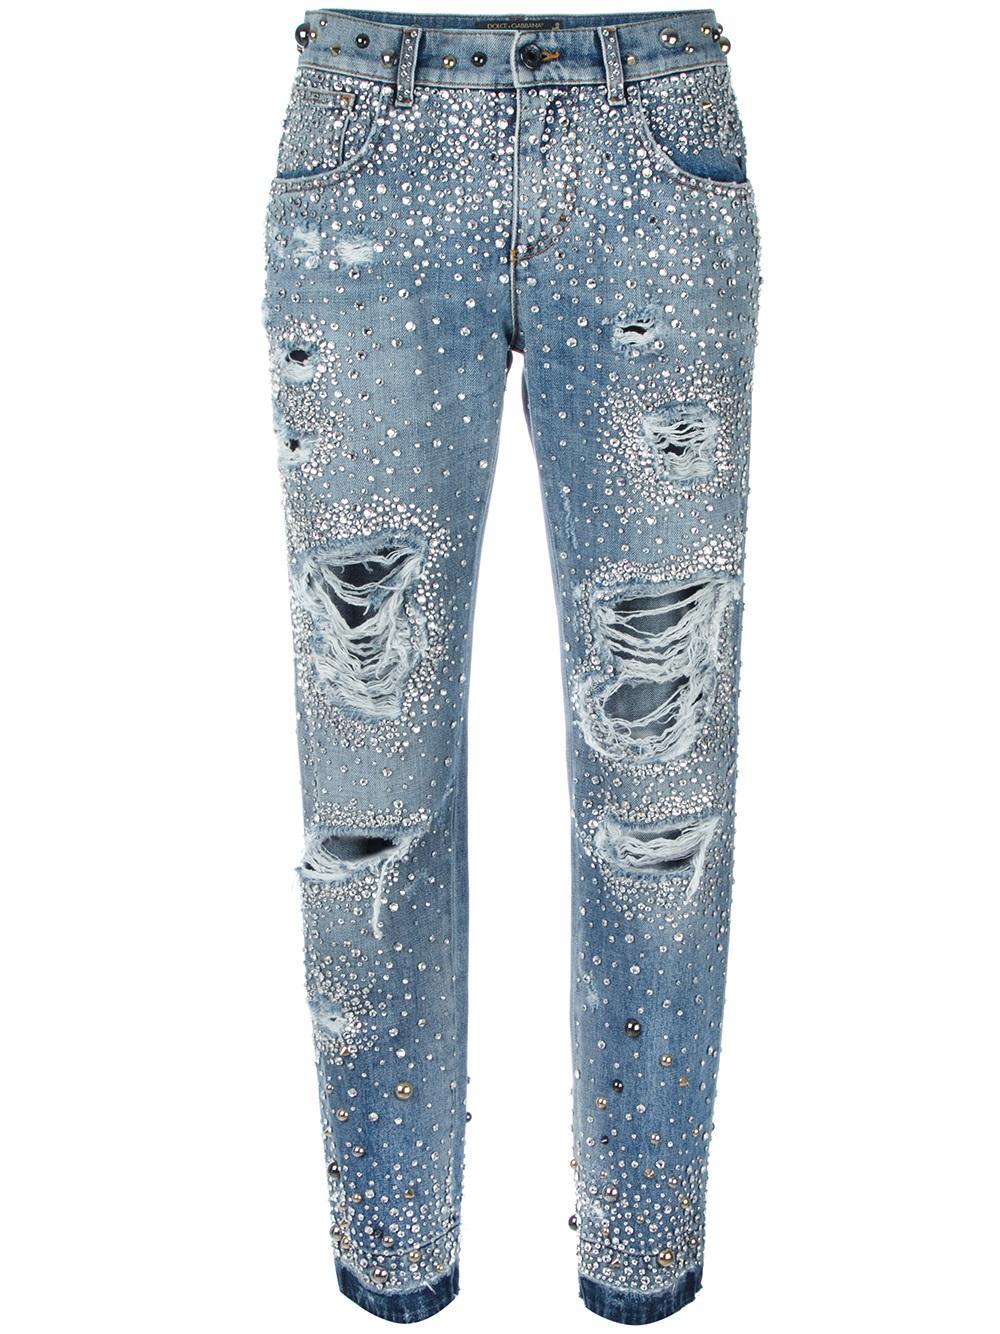 Dolce & Gabbana Rhinestone Ripped Boyfriend Jeans in Blue - Lyst